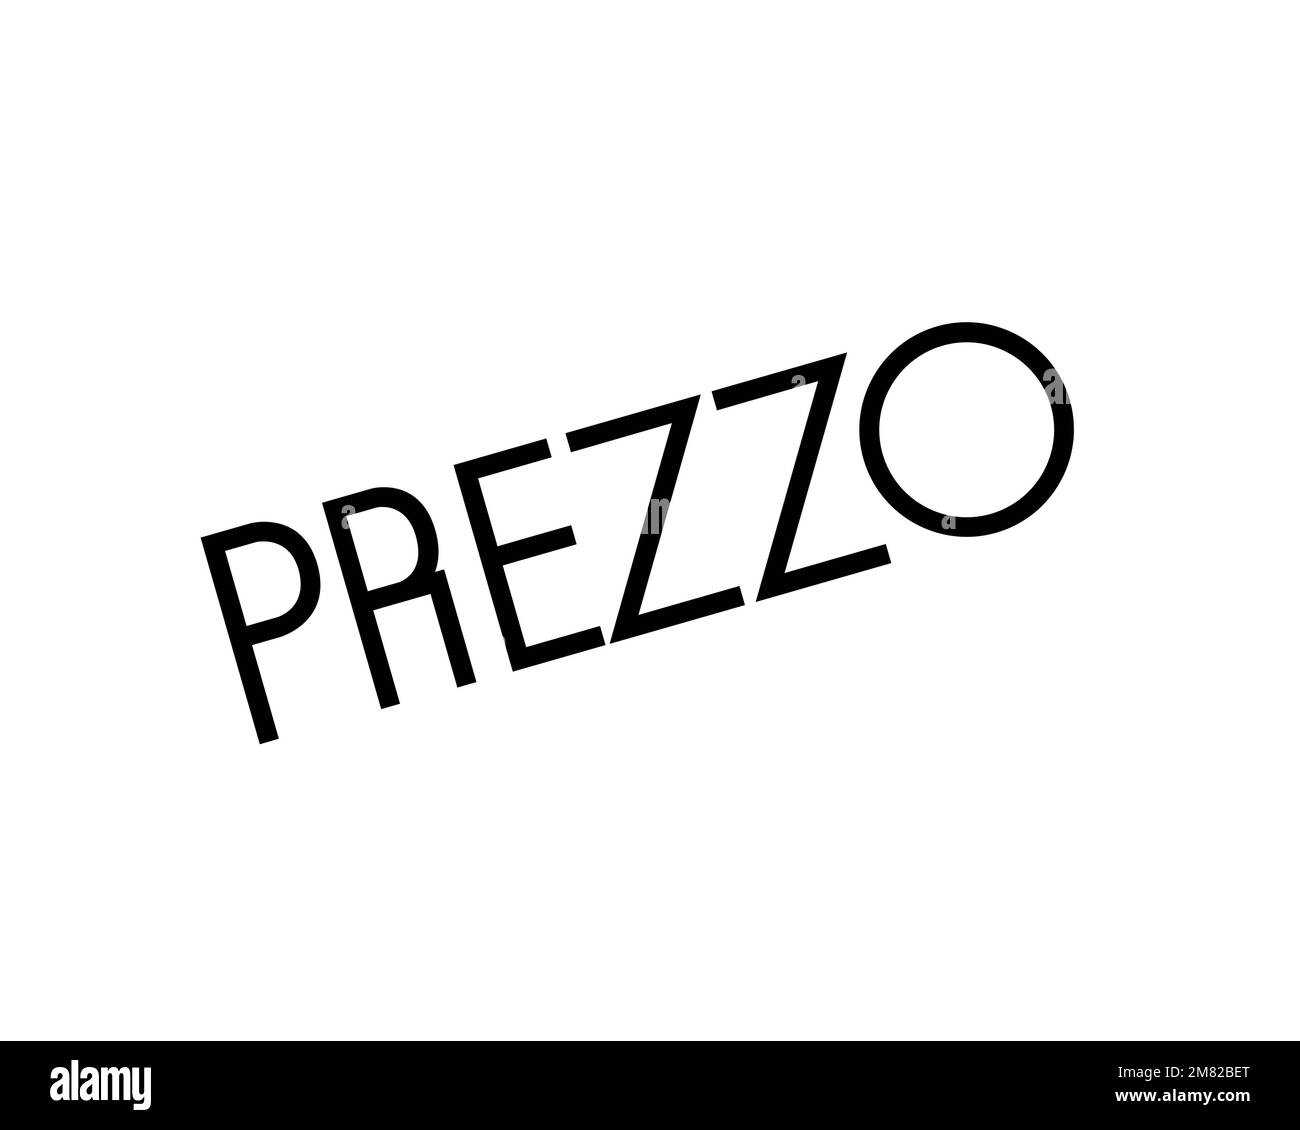 Prezzo restaurant, rotated logo, white background Stock Photo